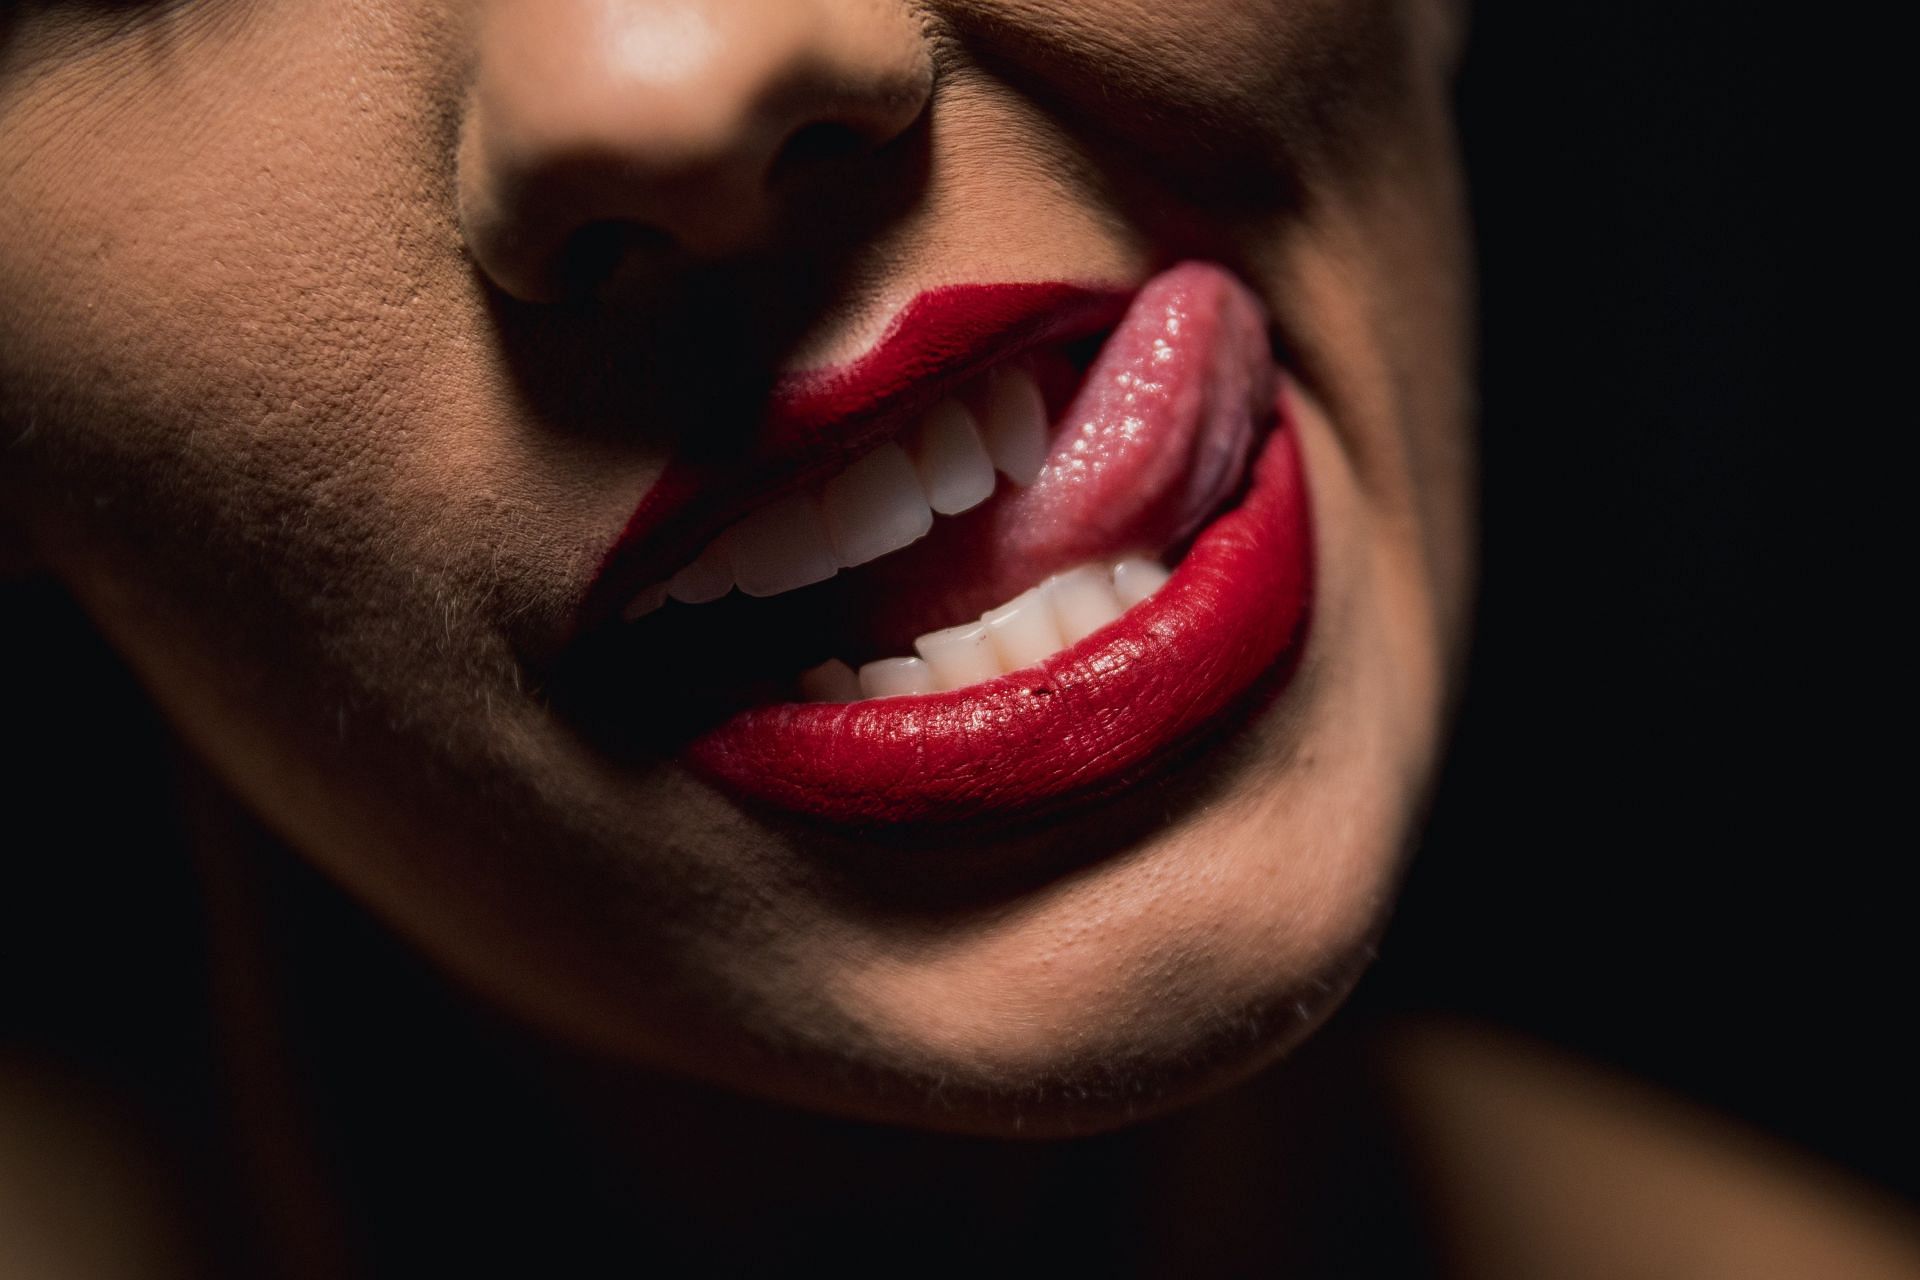 Accidental tongue bite (Image via Unsplash/ Joey Nicotra)